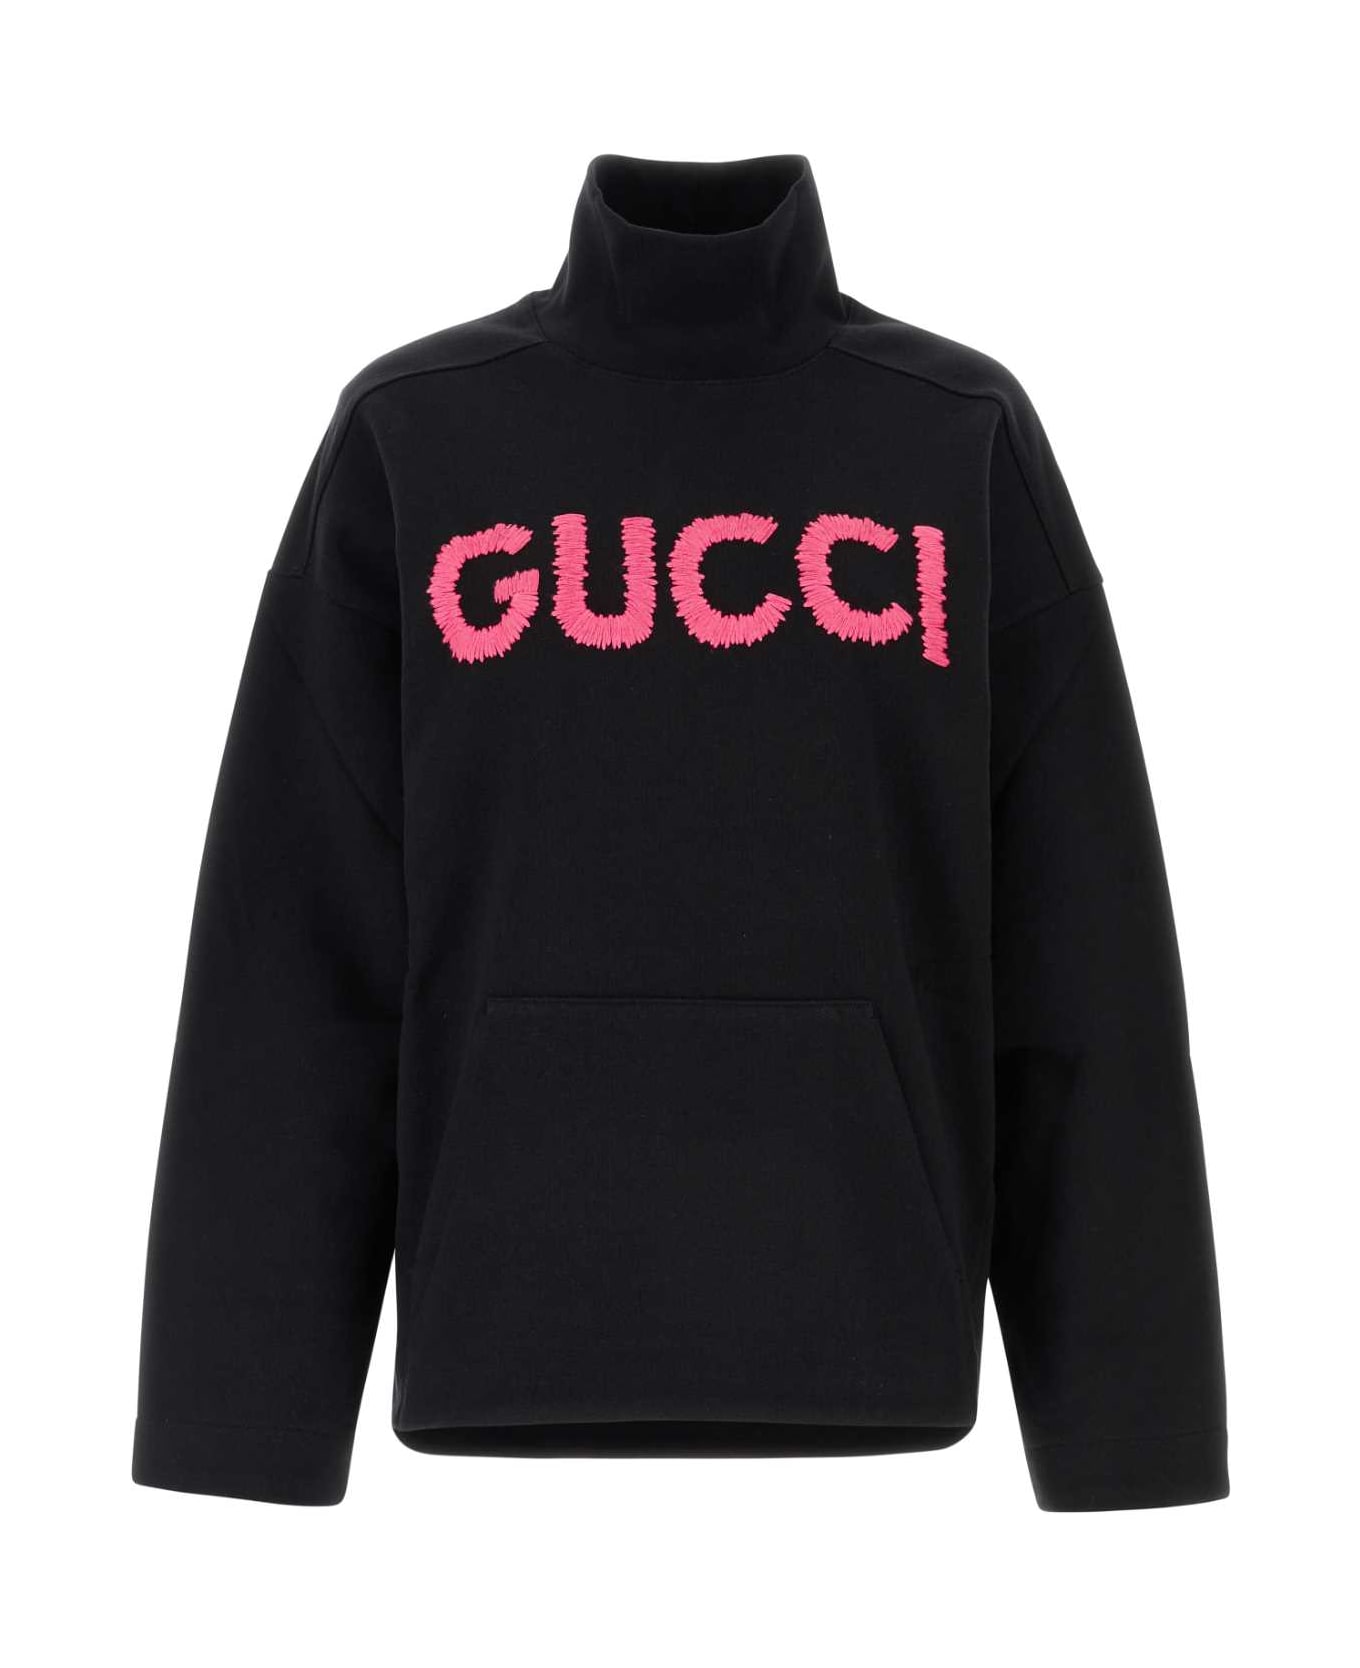 Gucci Black Cotton Oversize Sweatshirt - BLACKMIX